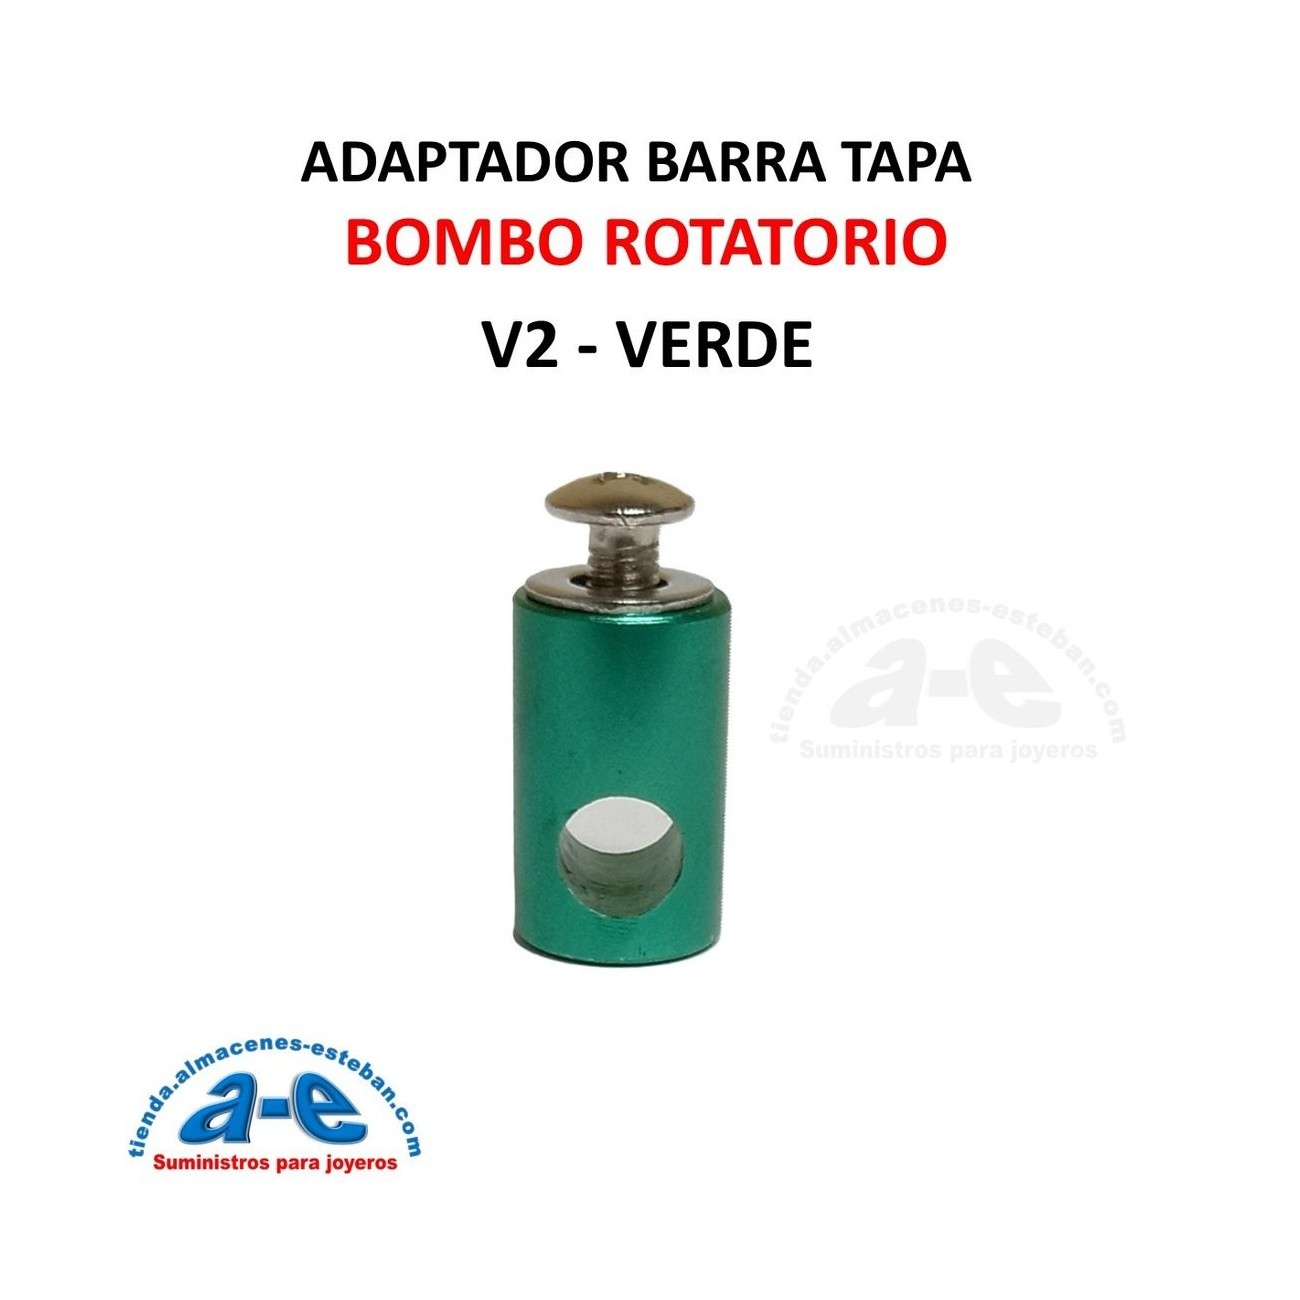 BOMBO ROTATORIO ADAPTADOR BARRA V2 (REPUESTO)